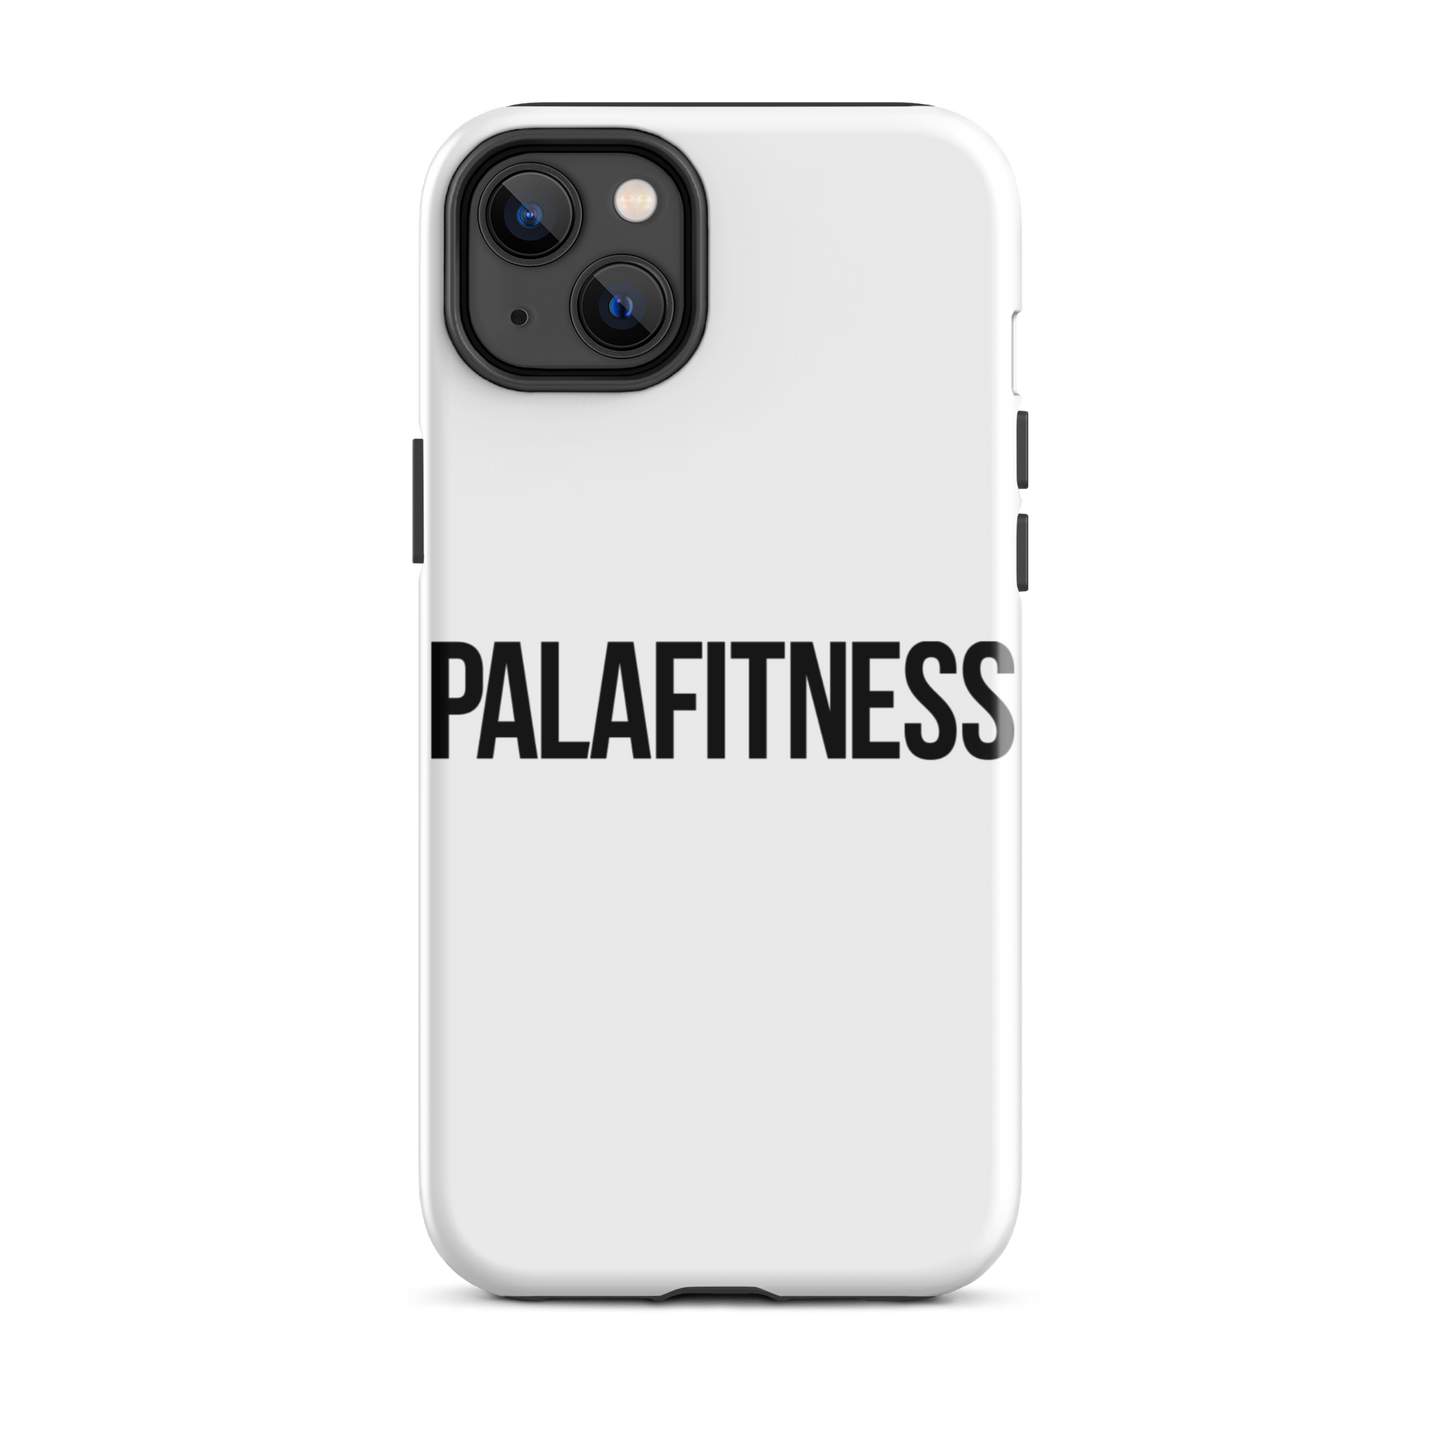 Palafitness - Cover iPhone rigida